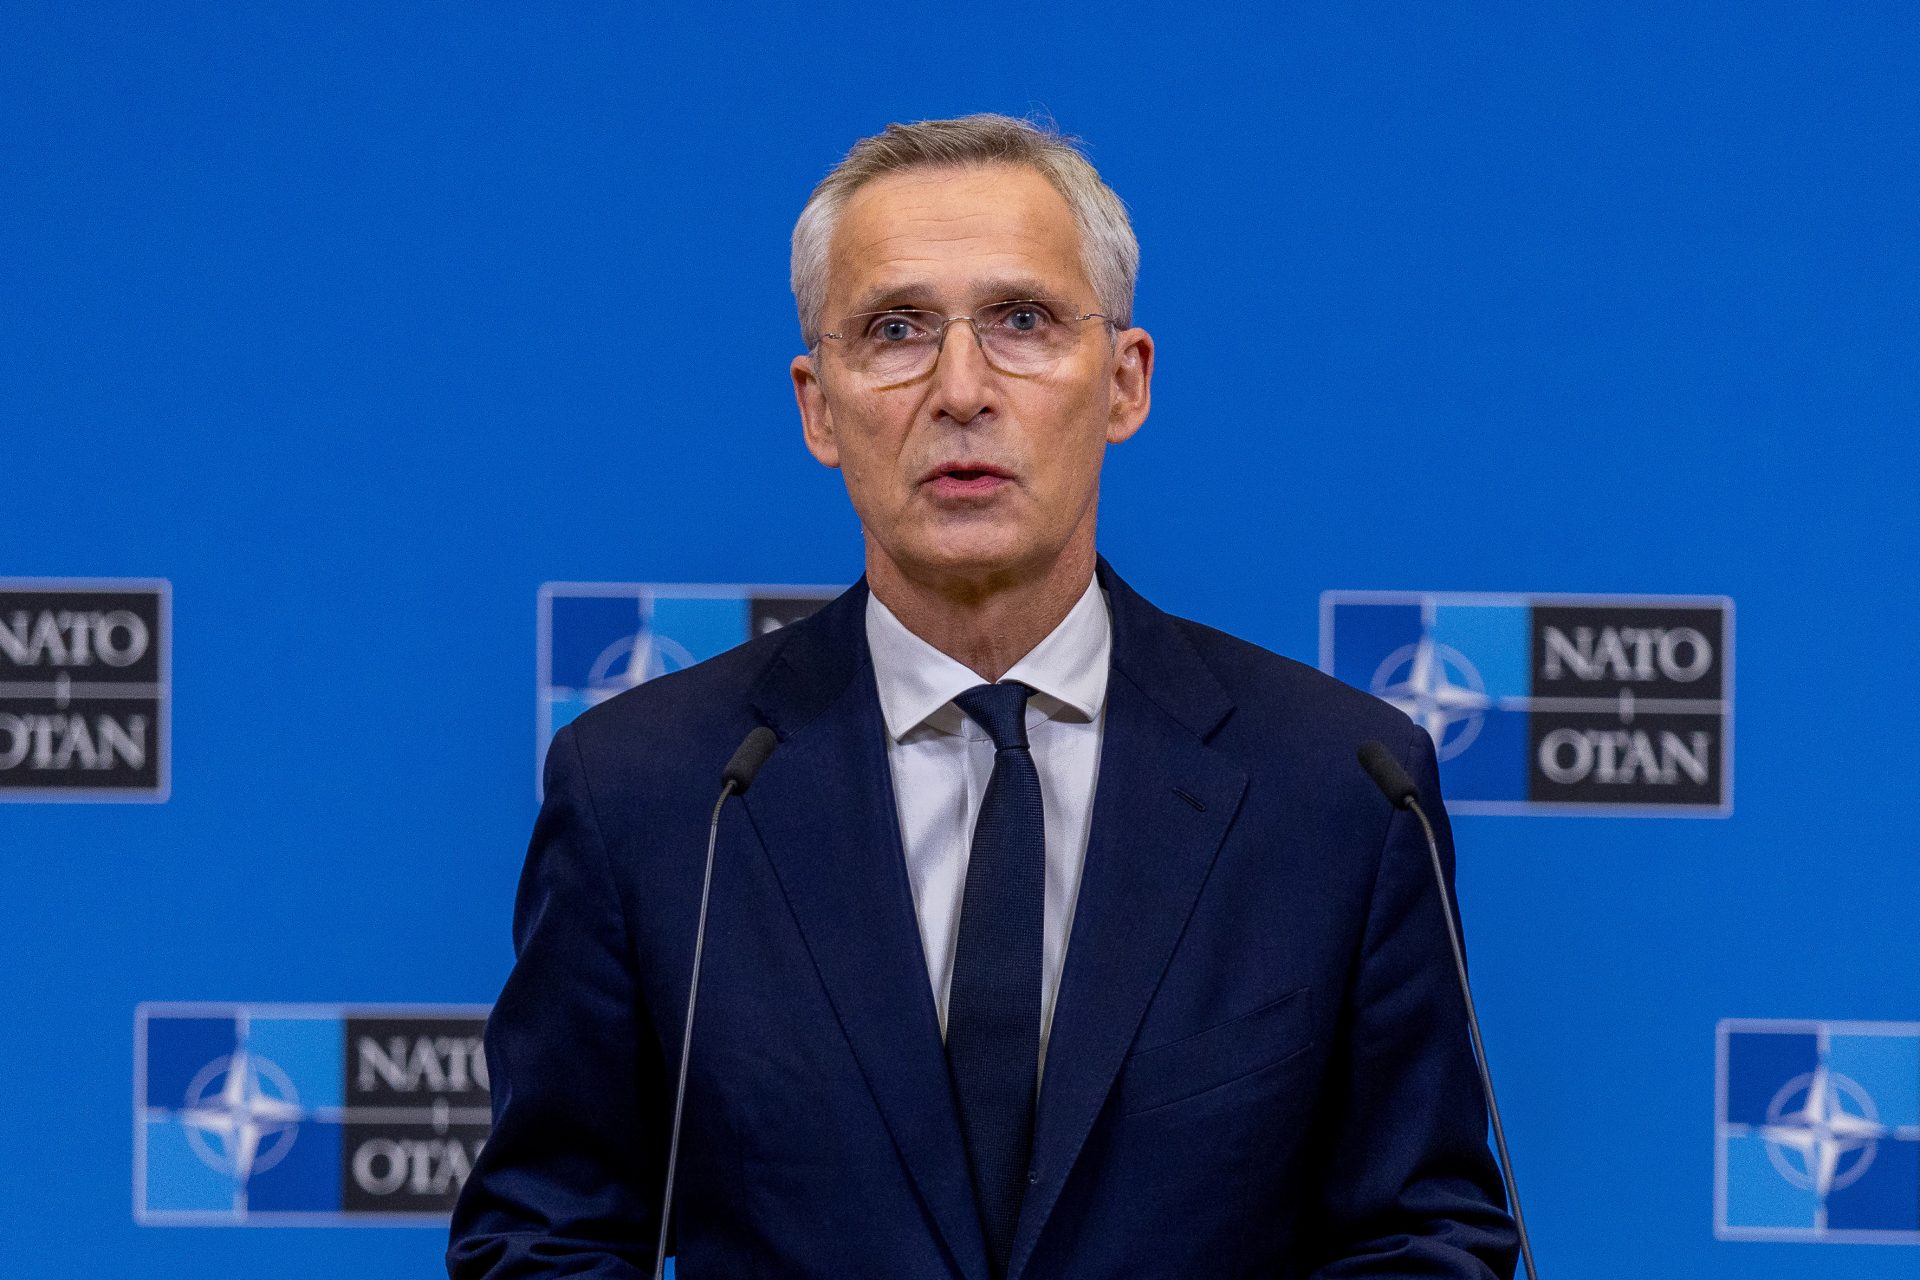 Criticism from NATO General Secretary Jens Stoltenberg